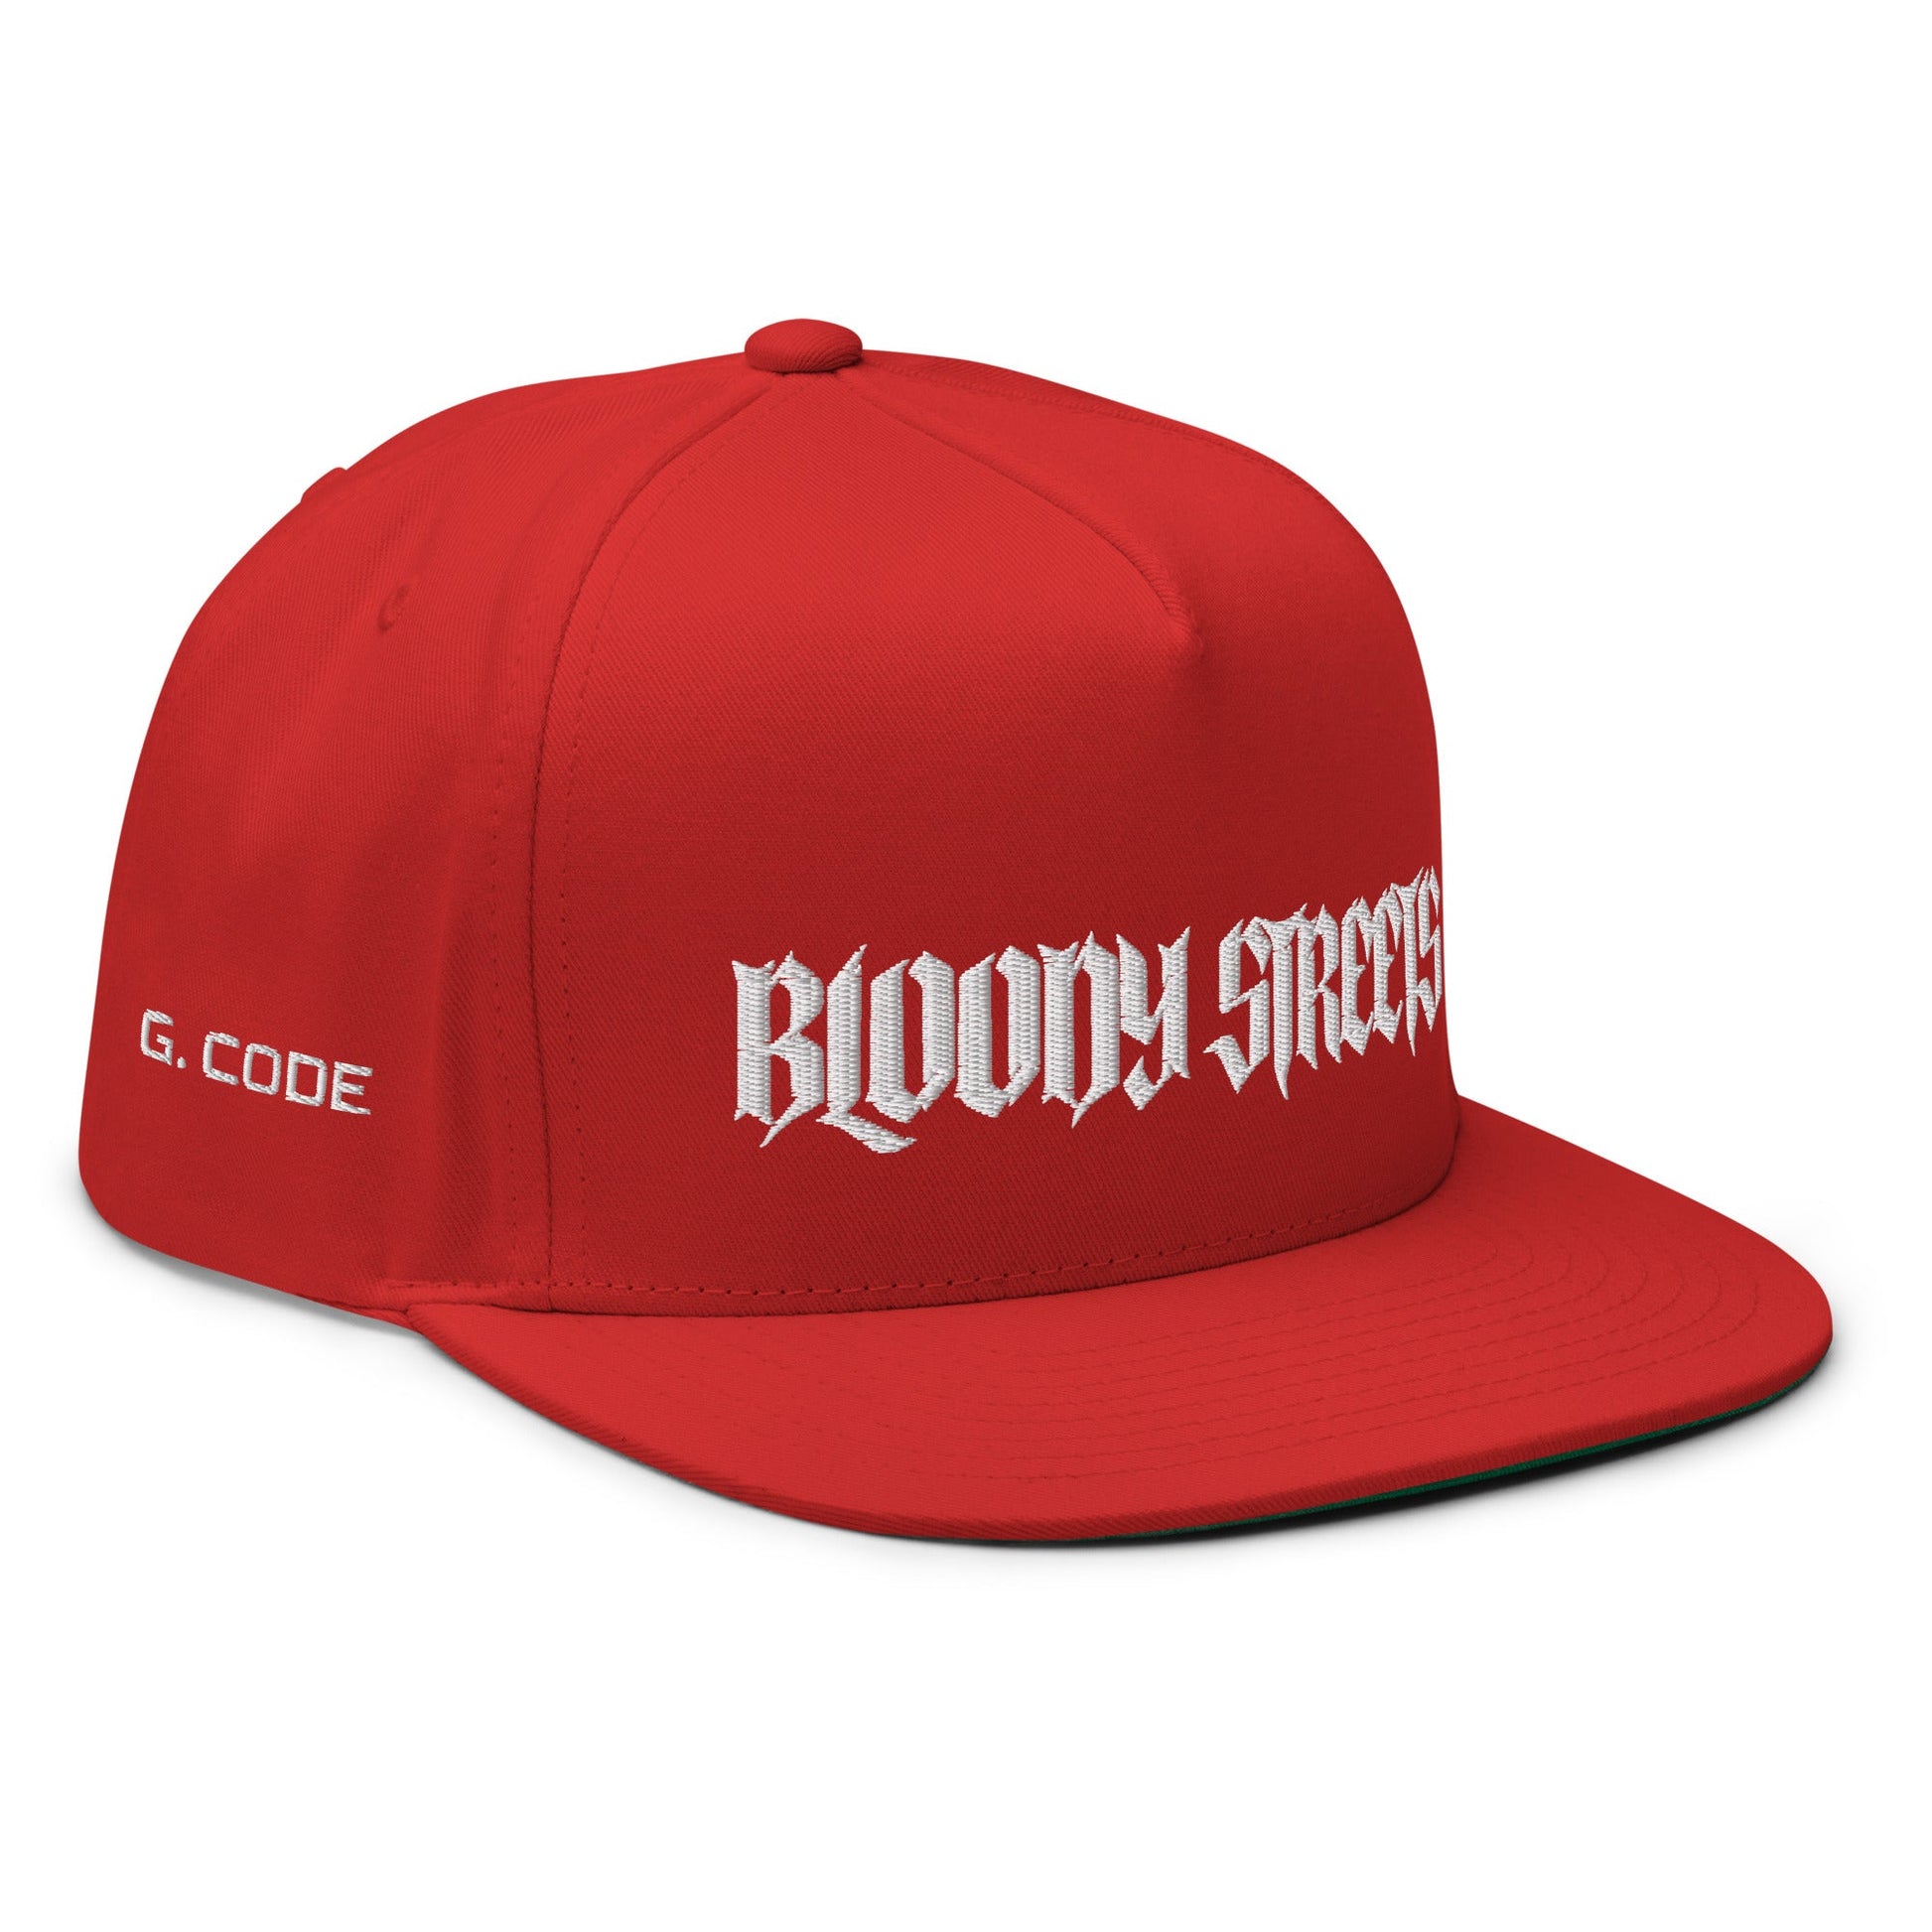 Bloody Streets Crew Flat Bill RED - BLOODY-STREETS.DE Streetwear Herren und Damen Hoodies, T-Shirts, Pullis